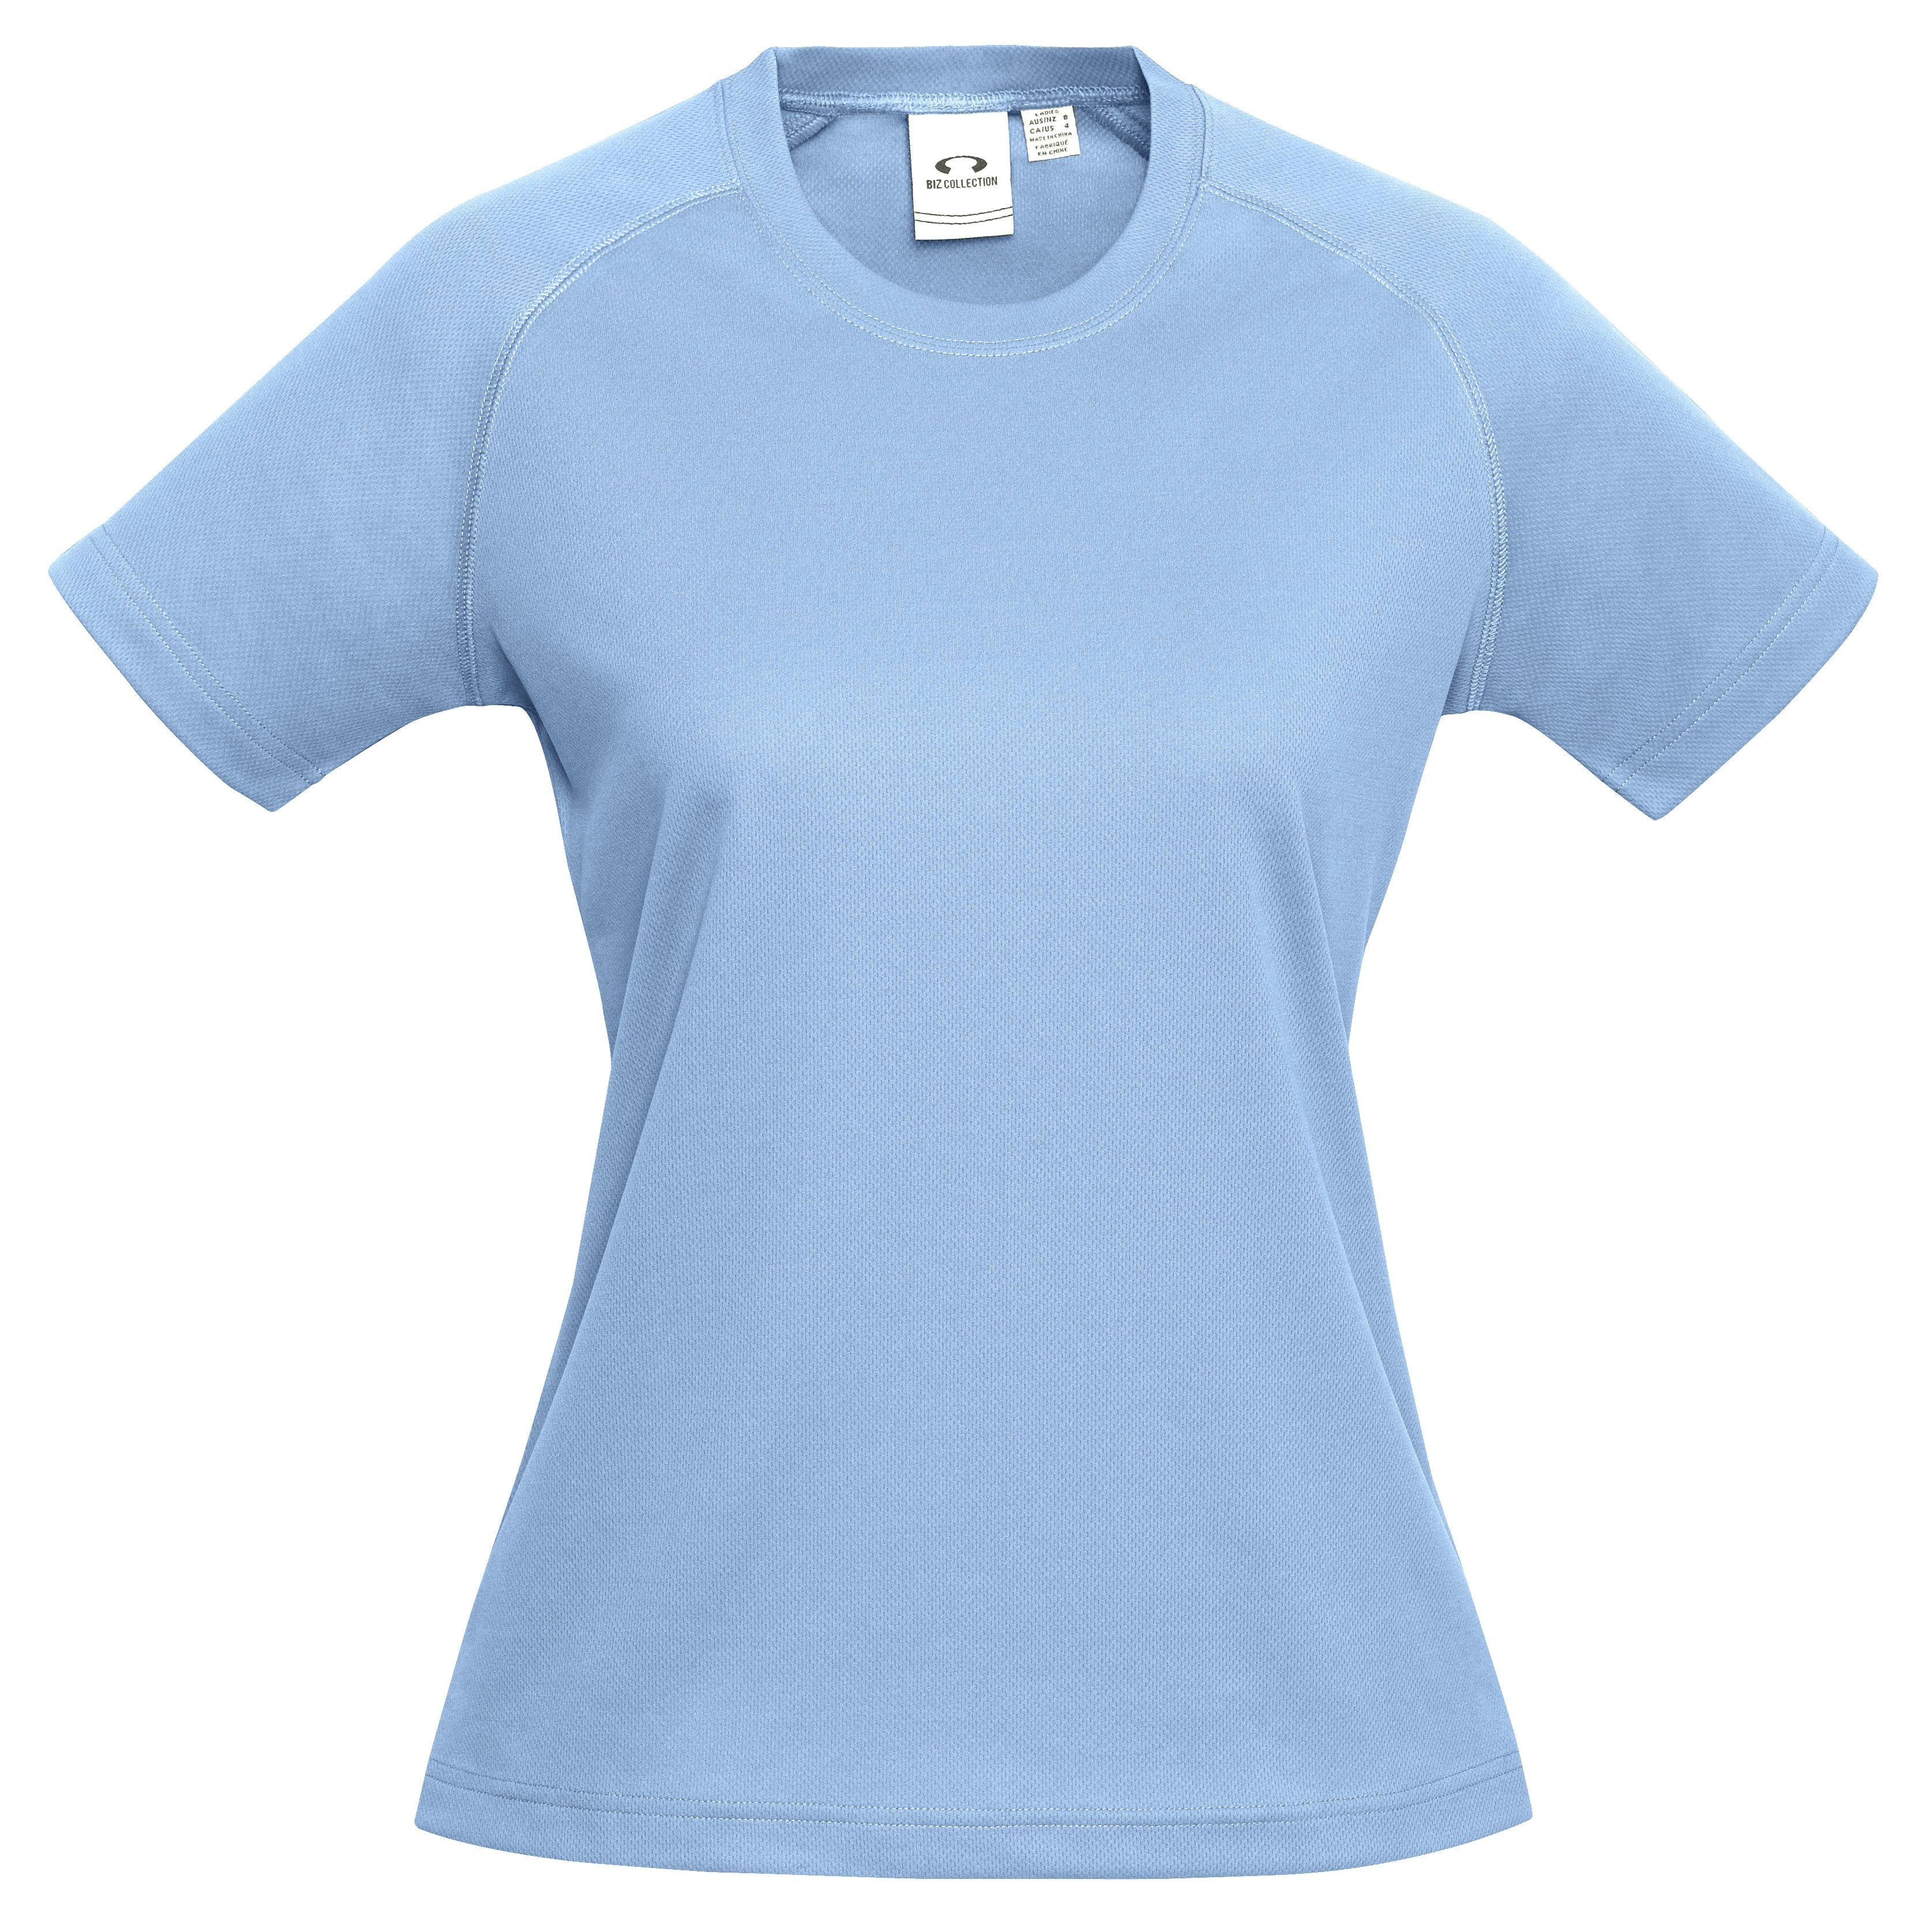 Ladies Sprint T-Shirt - Navy Only-L-Light Blue-LB